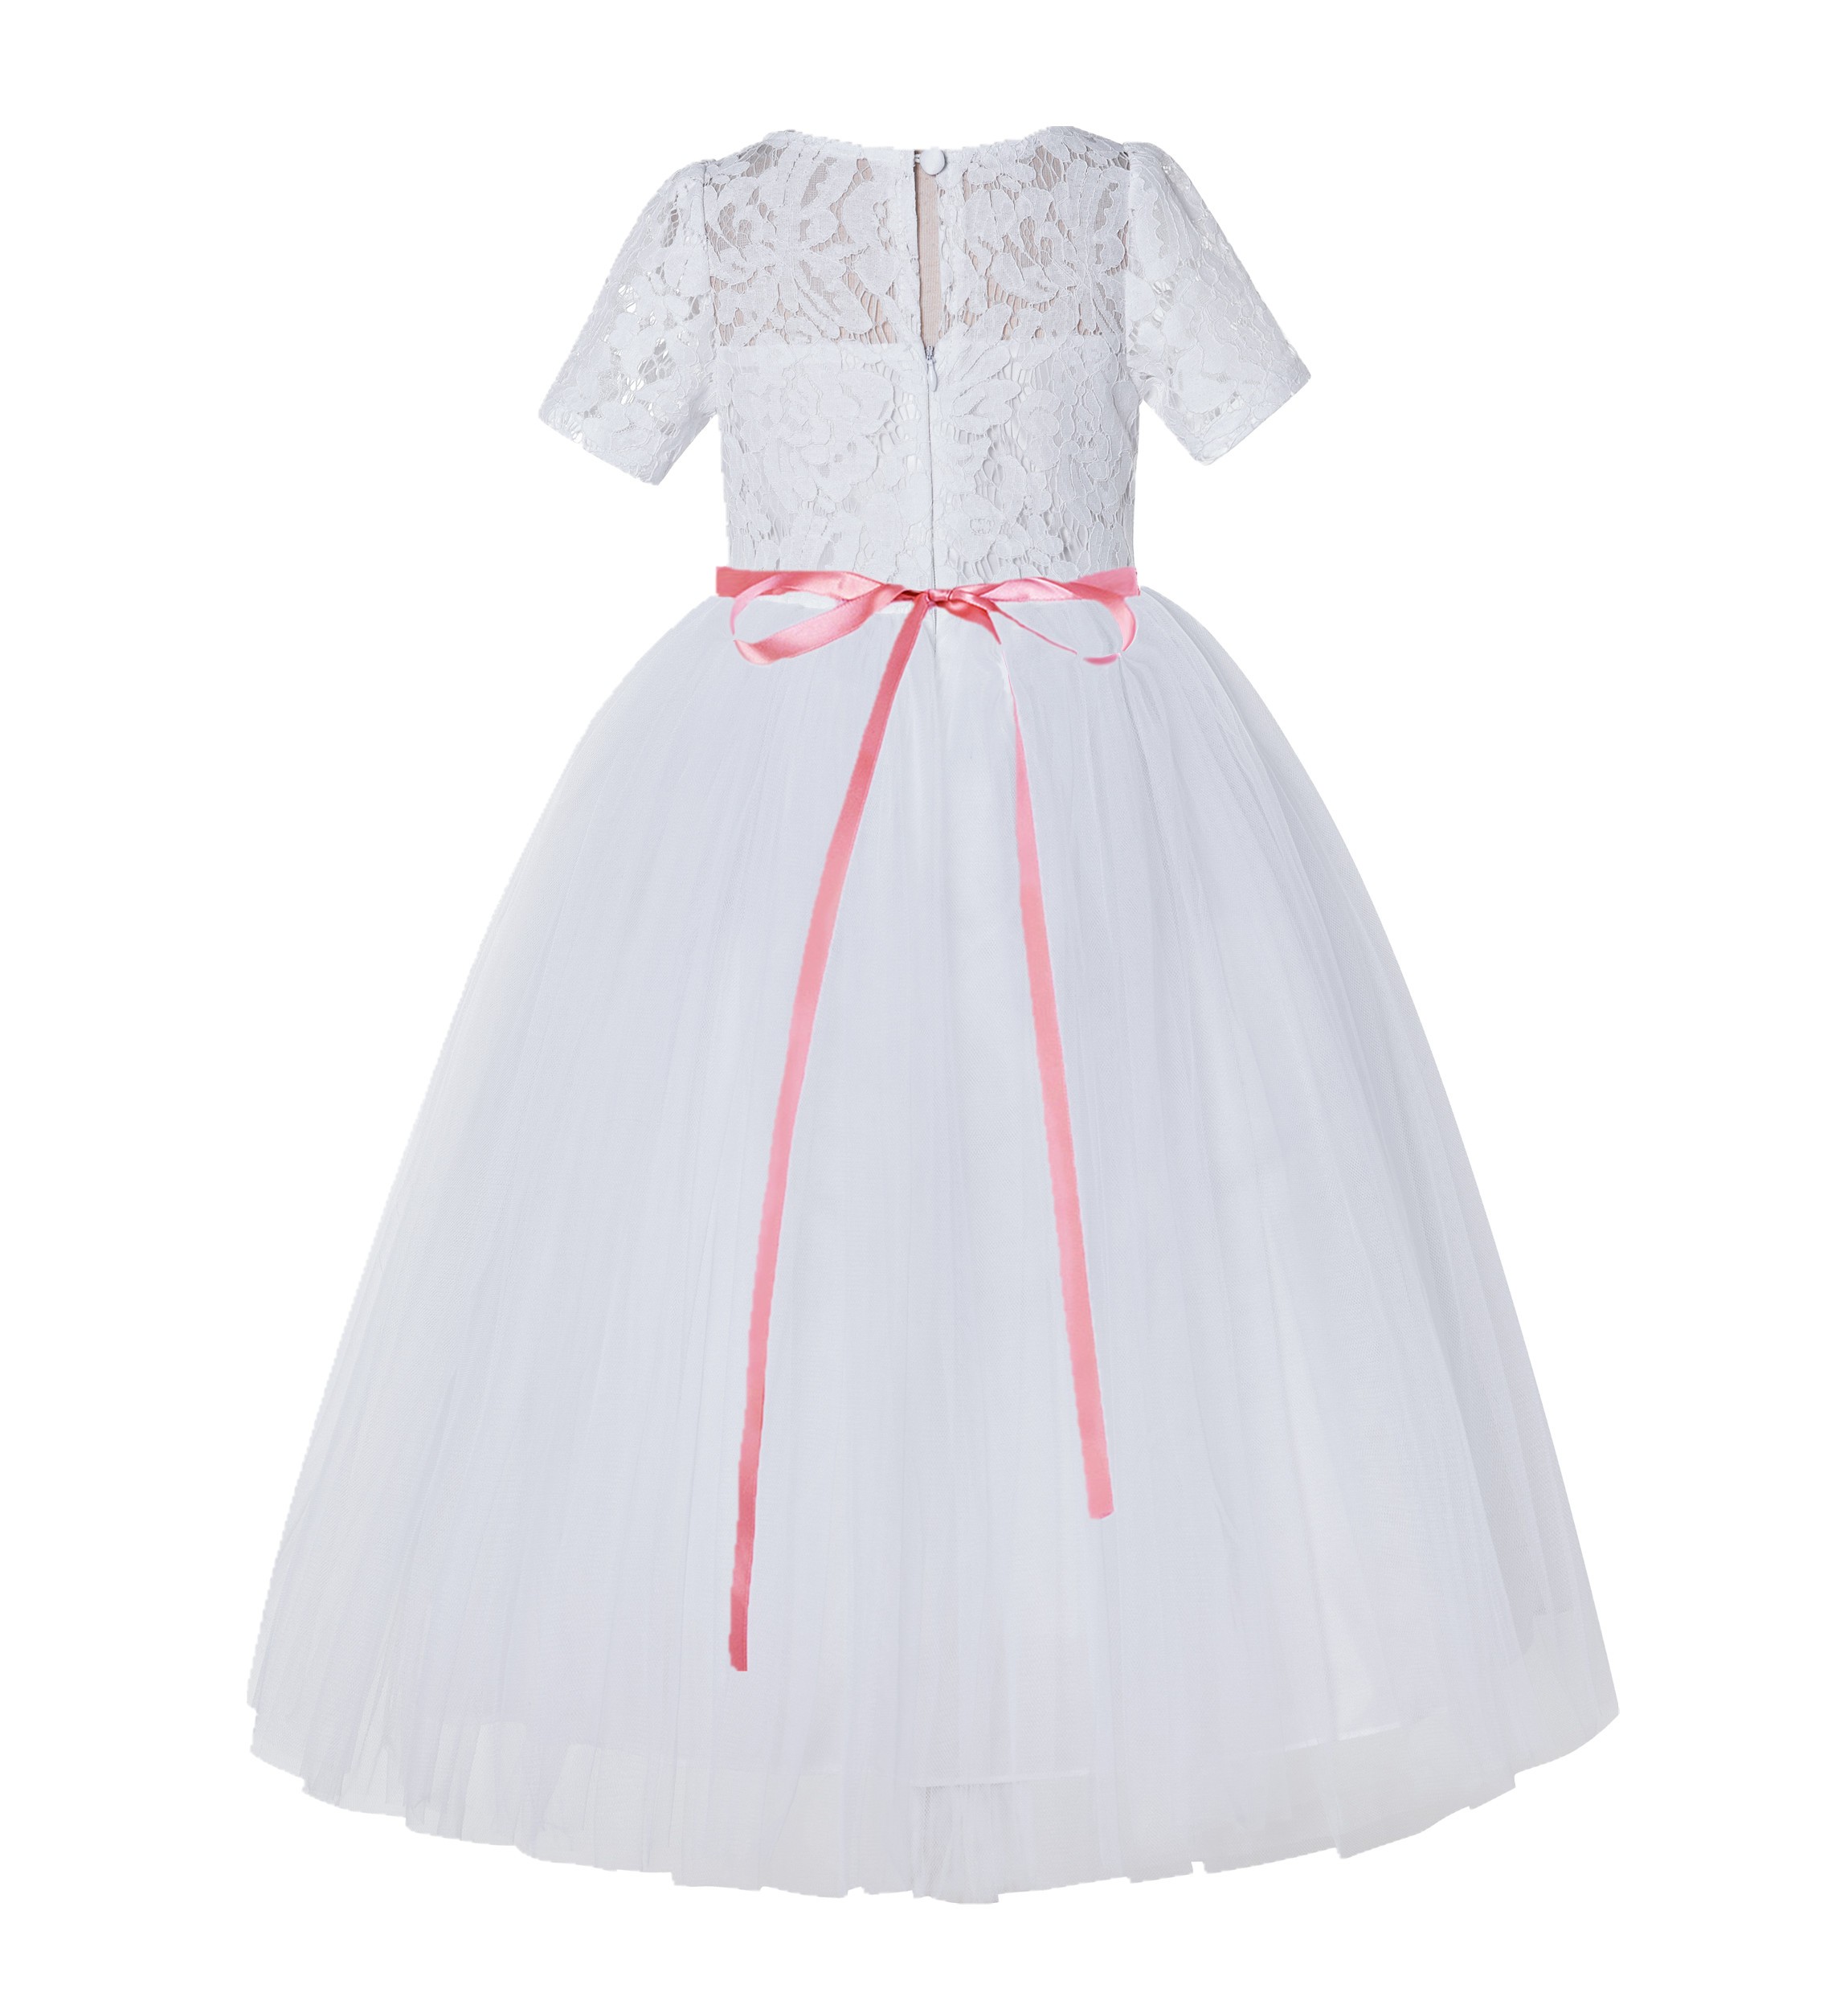 White / Dusty Rose Floral Lace Flower Girl Dress Baptism Dress LG2